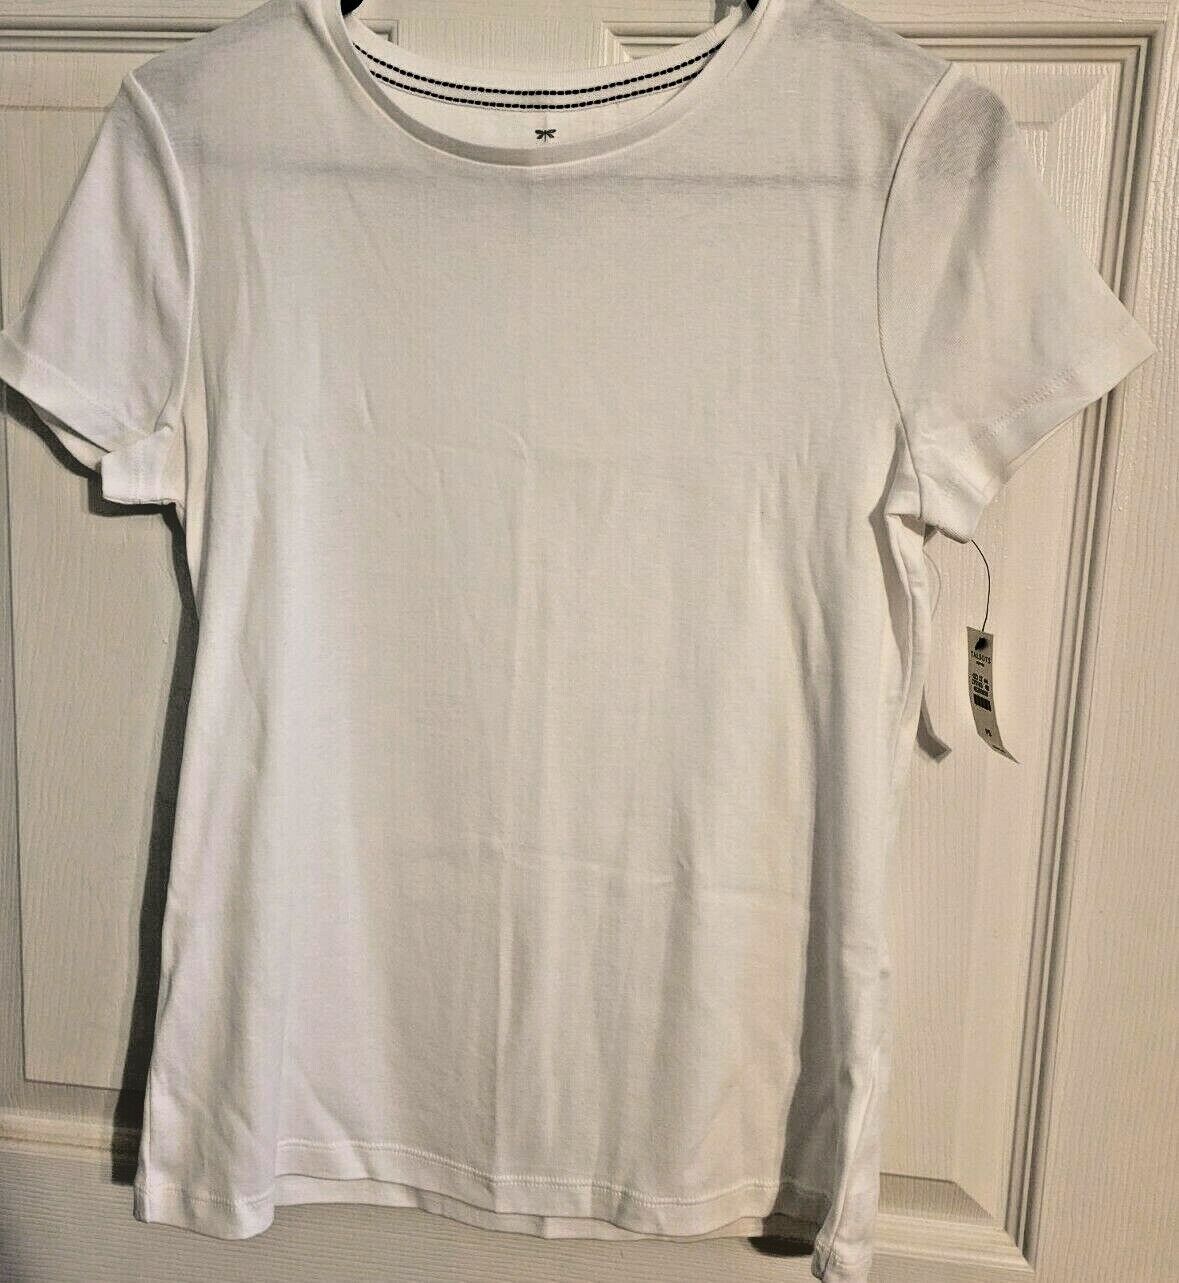 Ladies White Talbot T-shirt Small petite Pima cotton new with tags